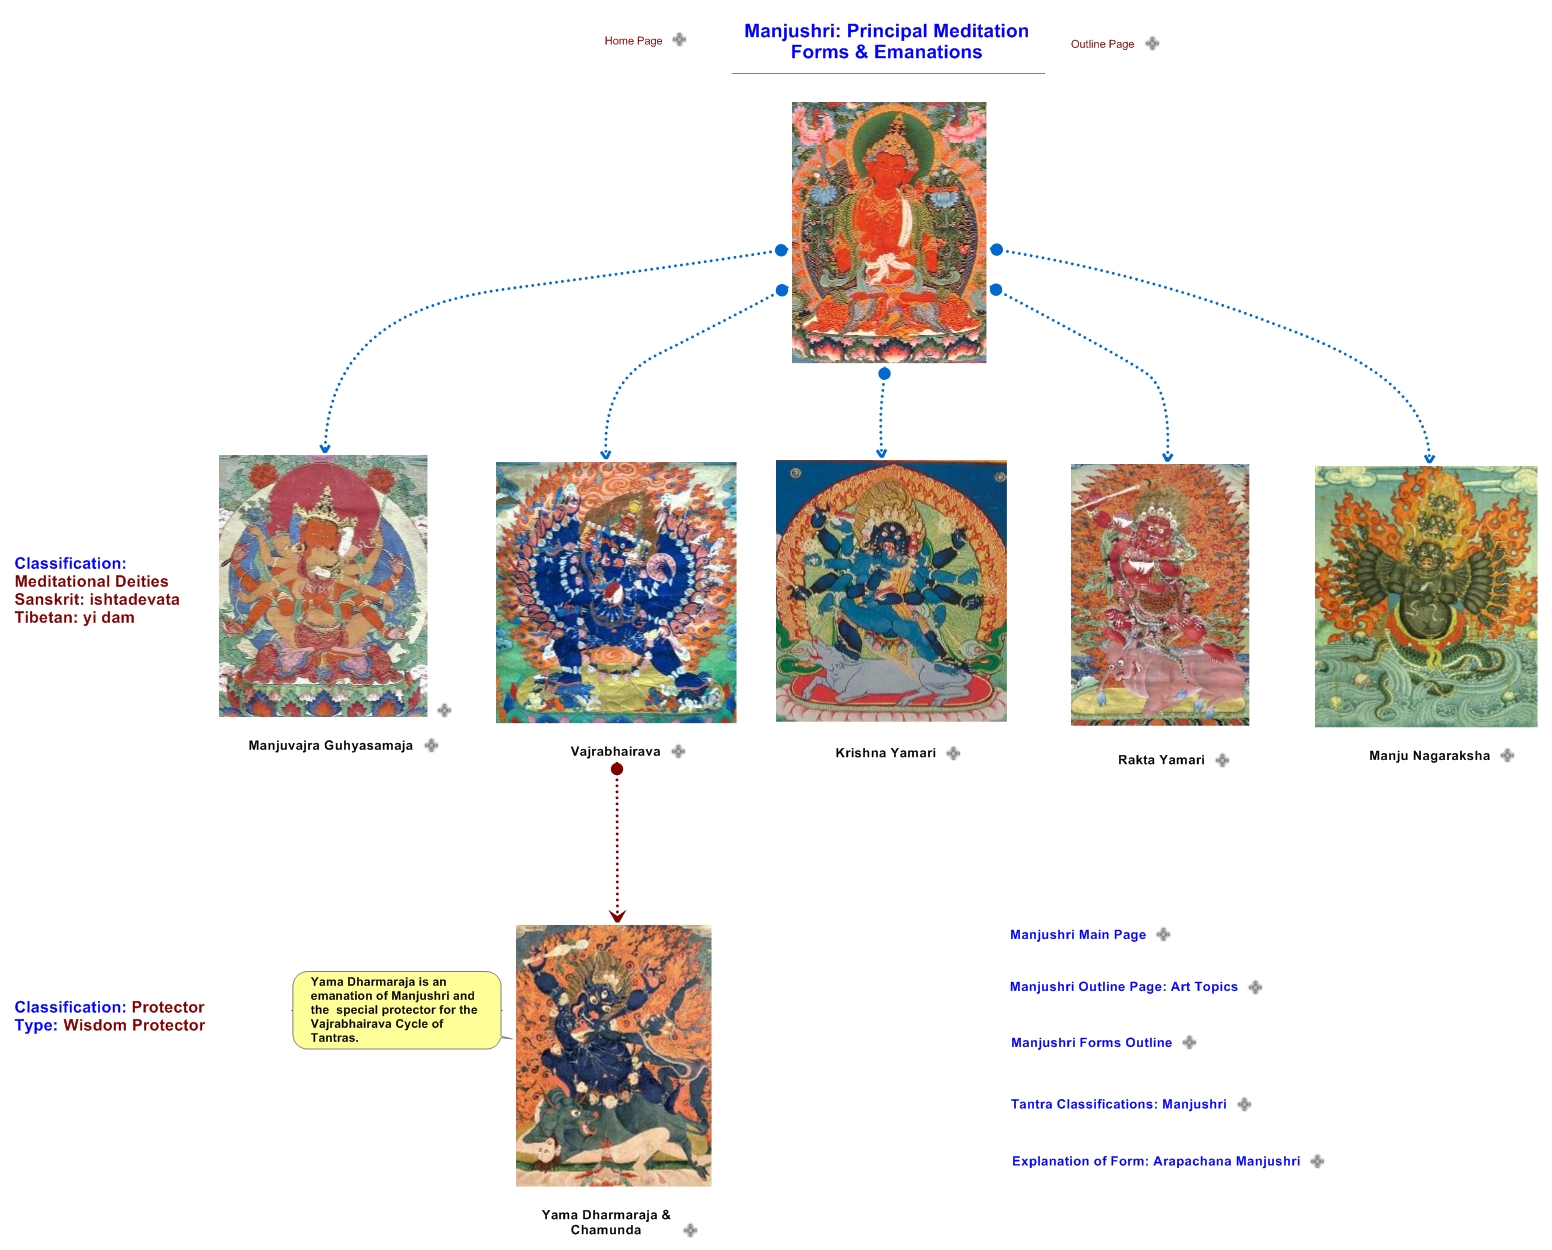 Manjushri: Principal Meditation Forms & Emanations